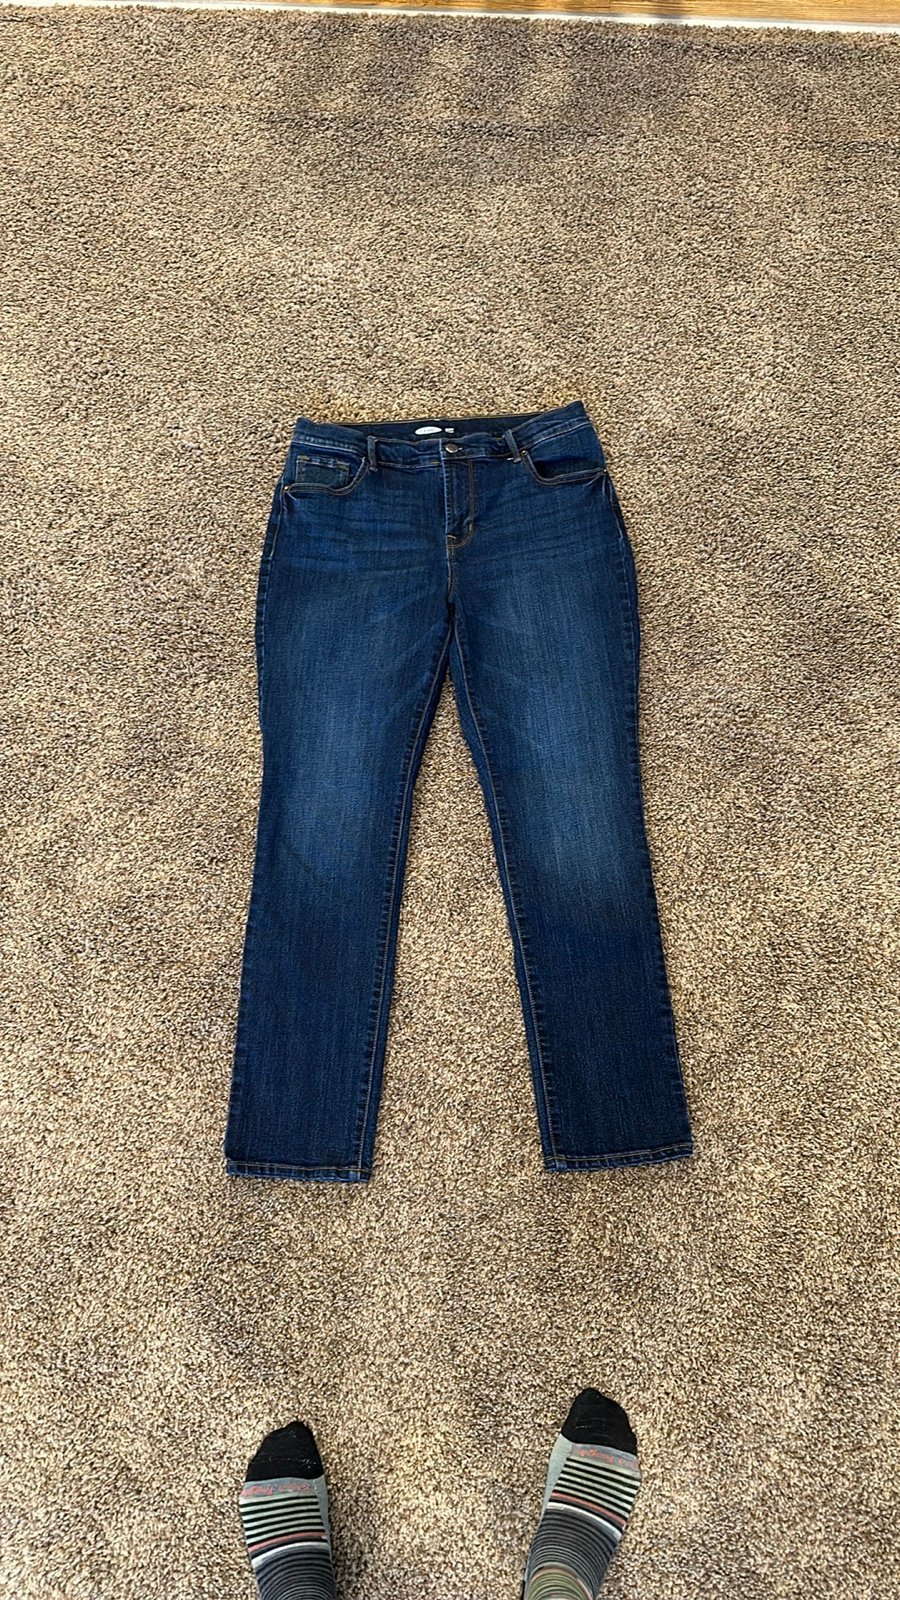 Popular Old Navy curvy straight jeans size 8 short o9lA